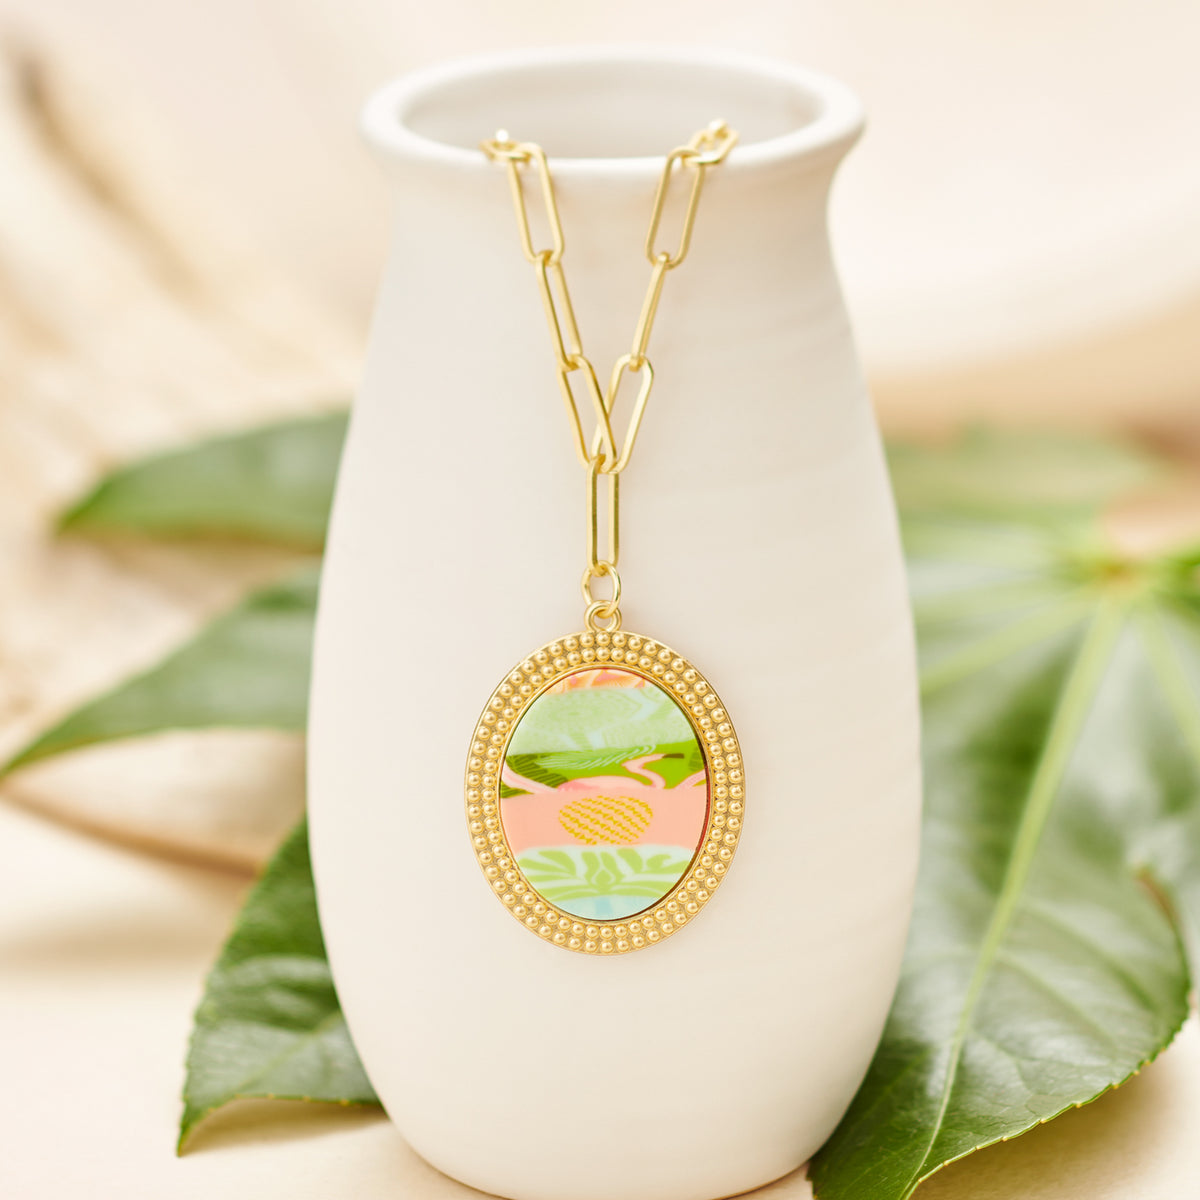 Palm Beach Reversible Link Medallion Necklace